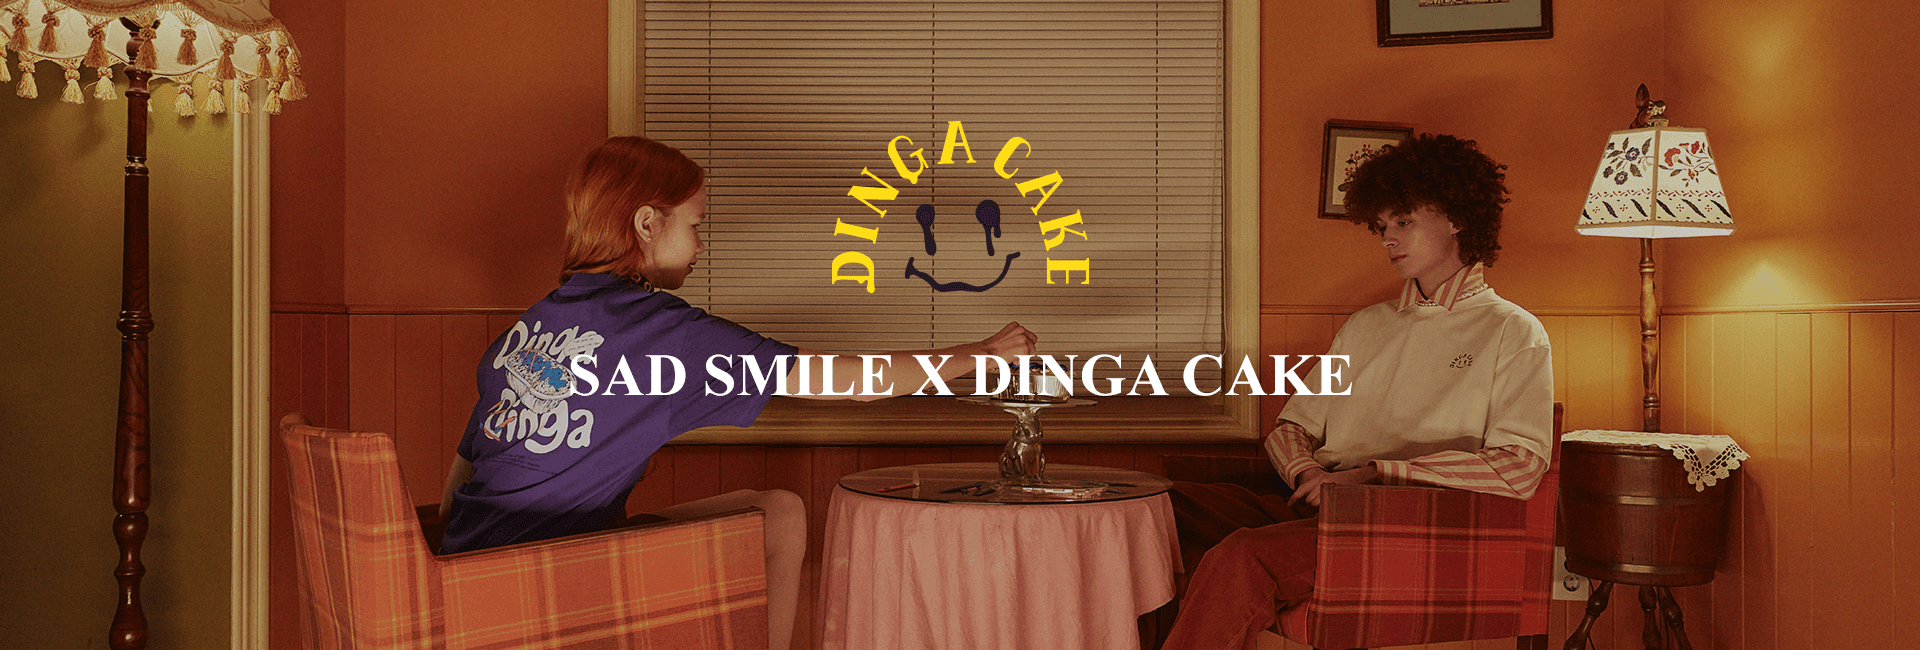 CUSTOMELLOW_SAD SMILE X DINGA CAKE_PC